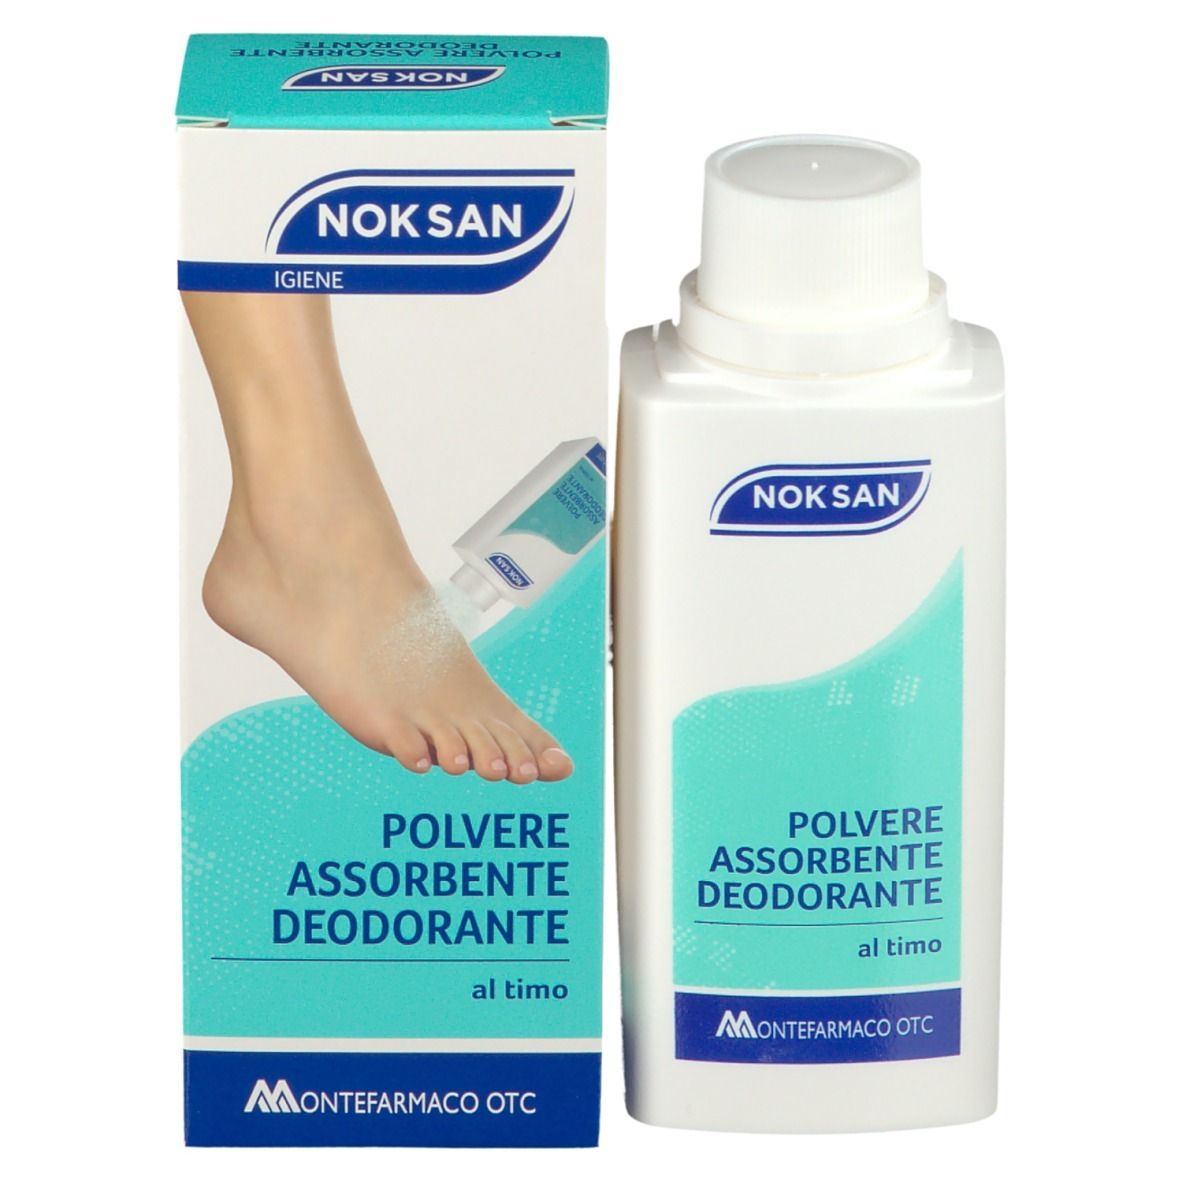 NOK SAN Polvere Assorbente Deodorante